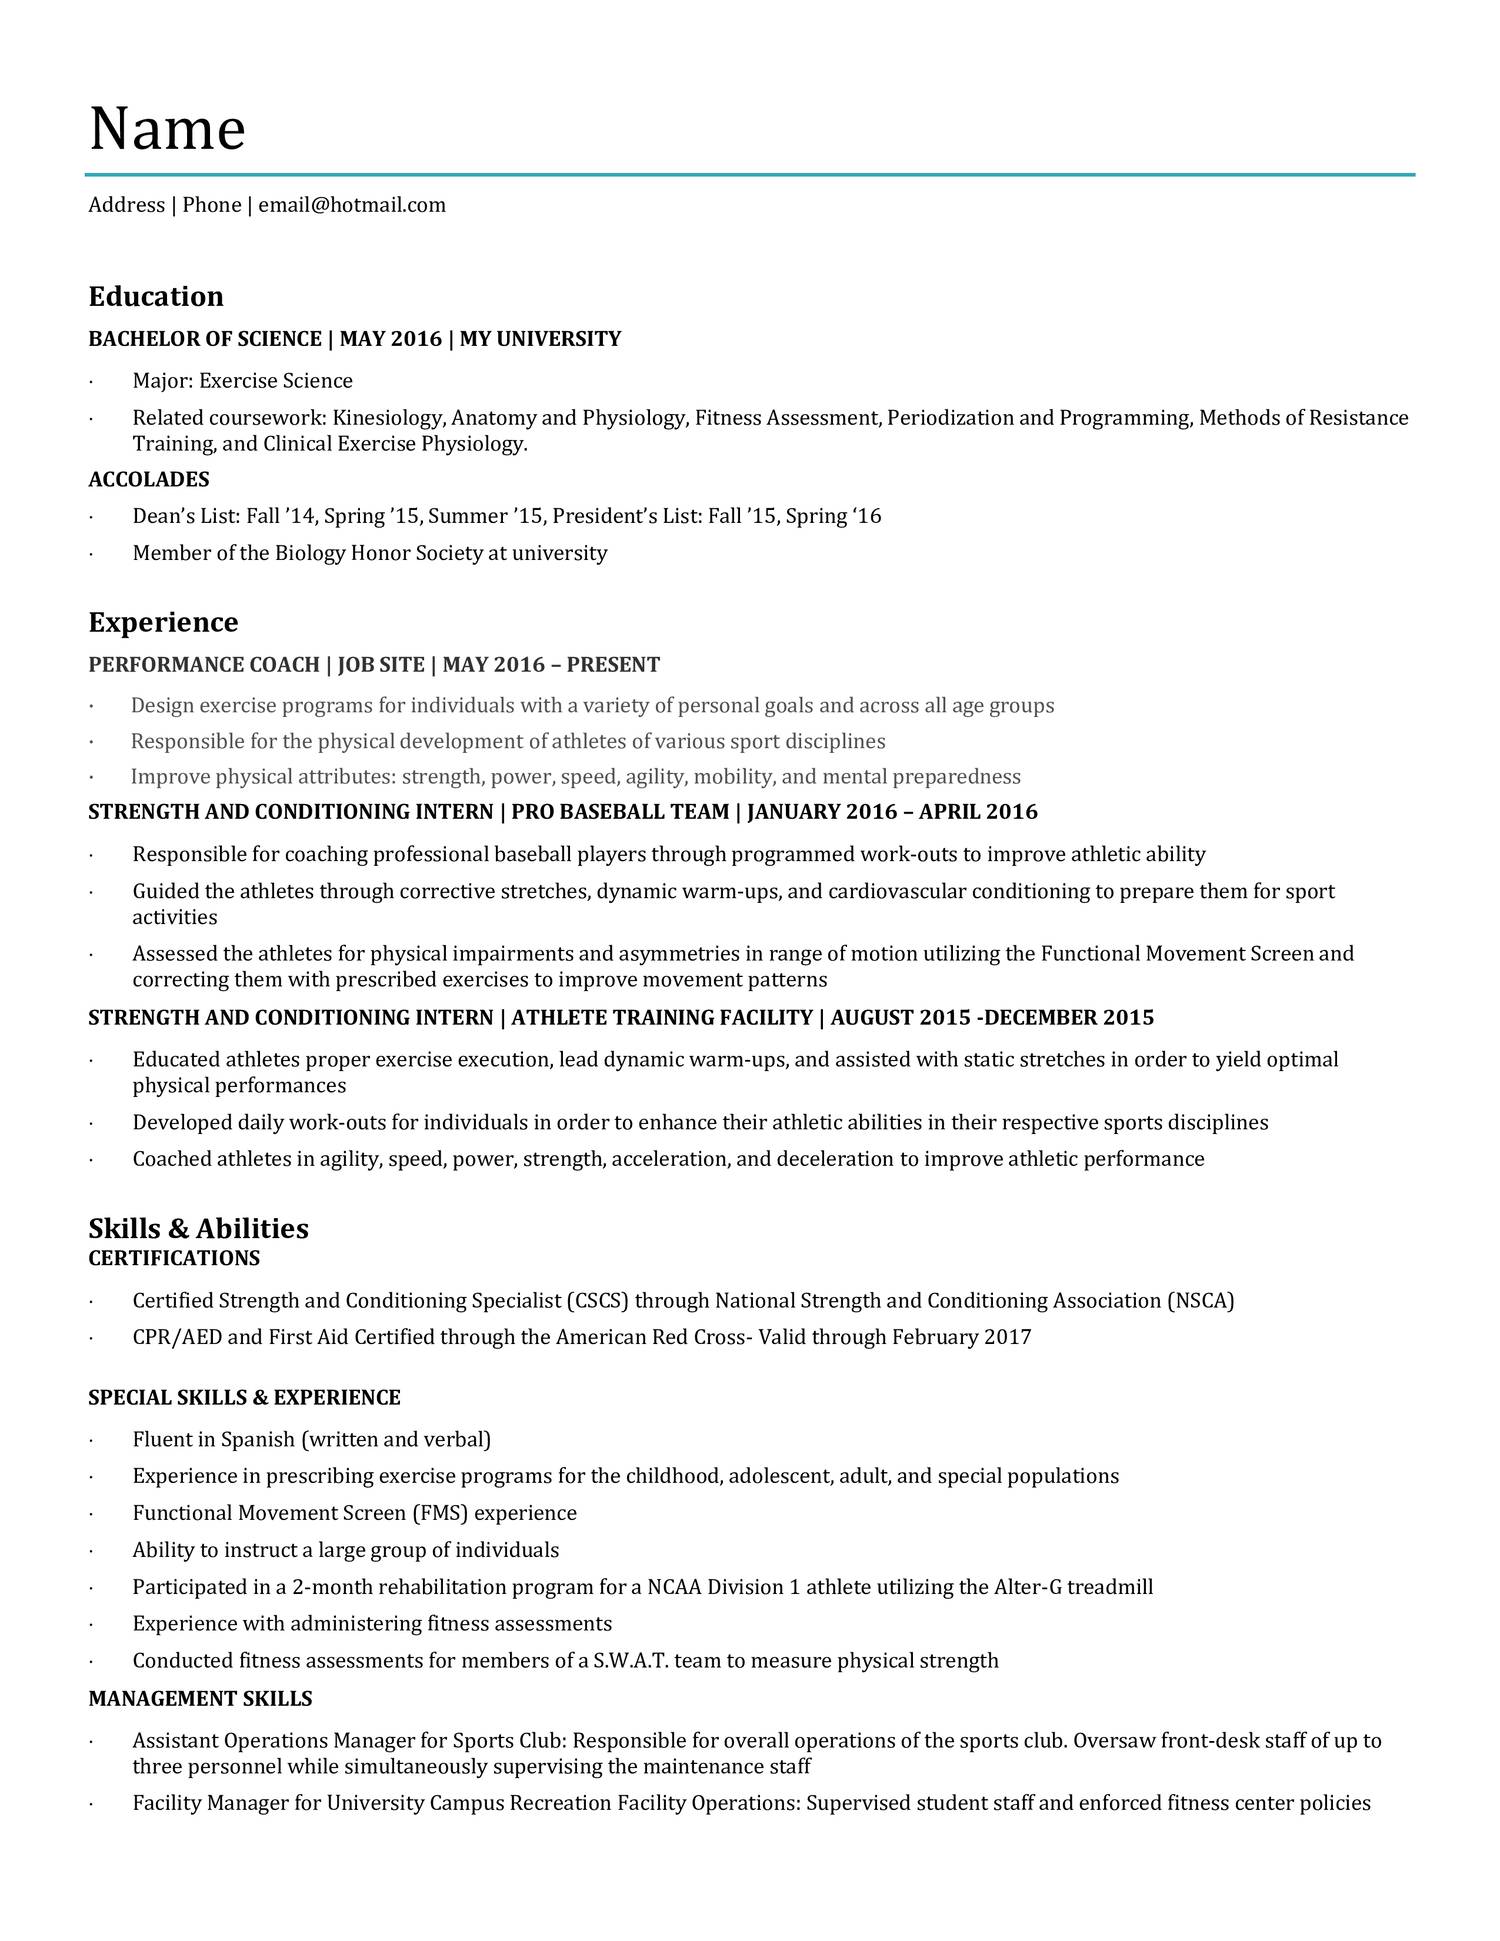 free resume templates professional reddit